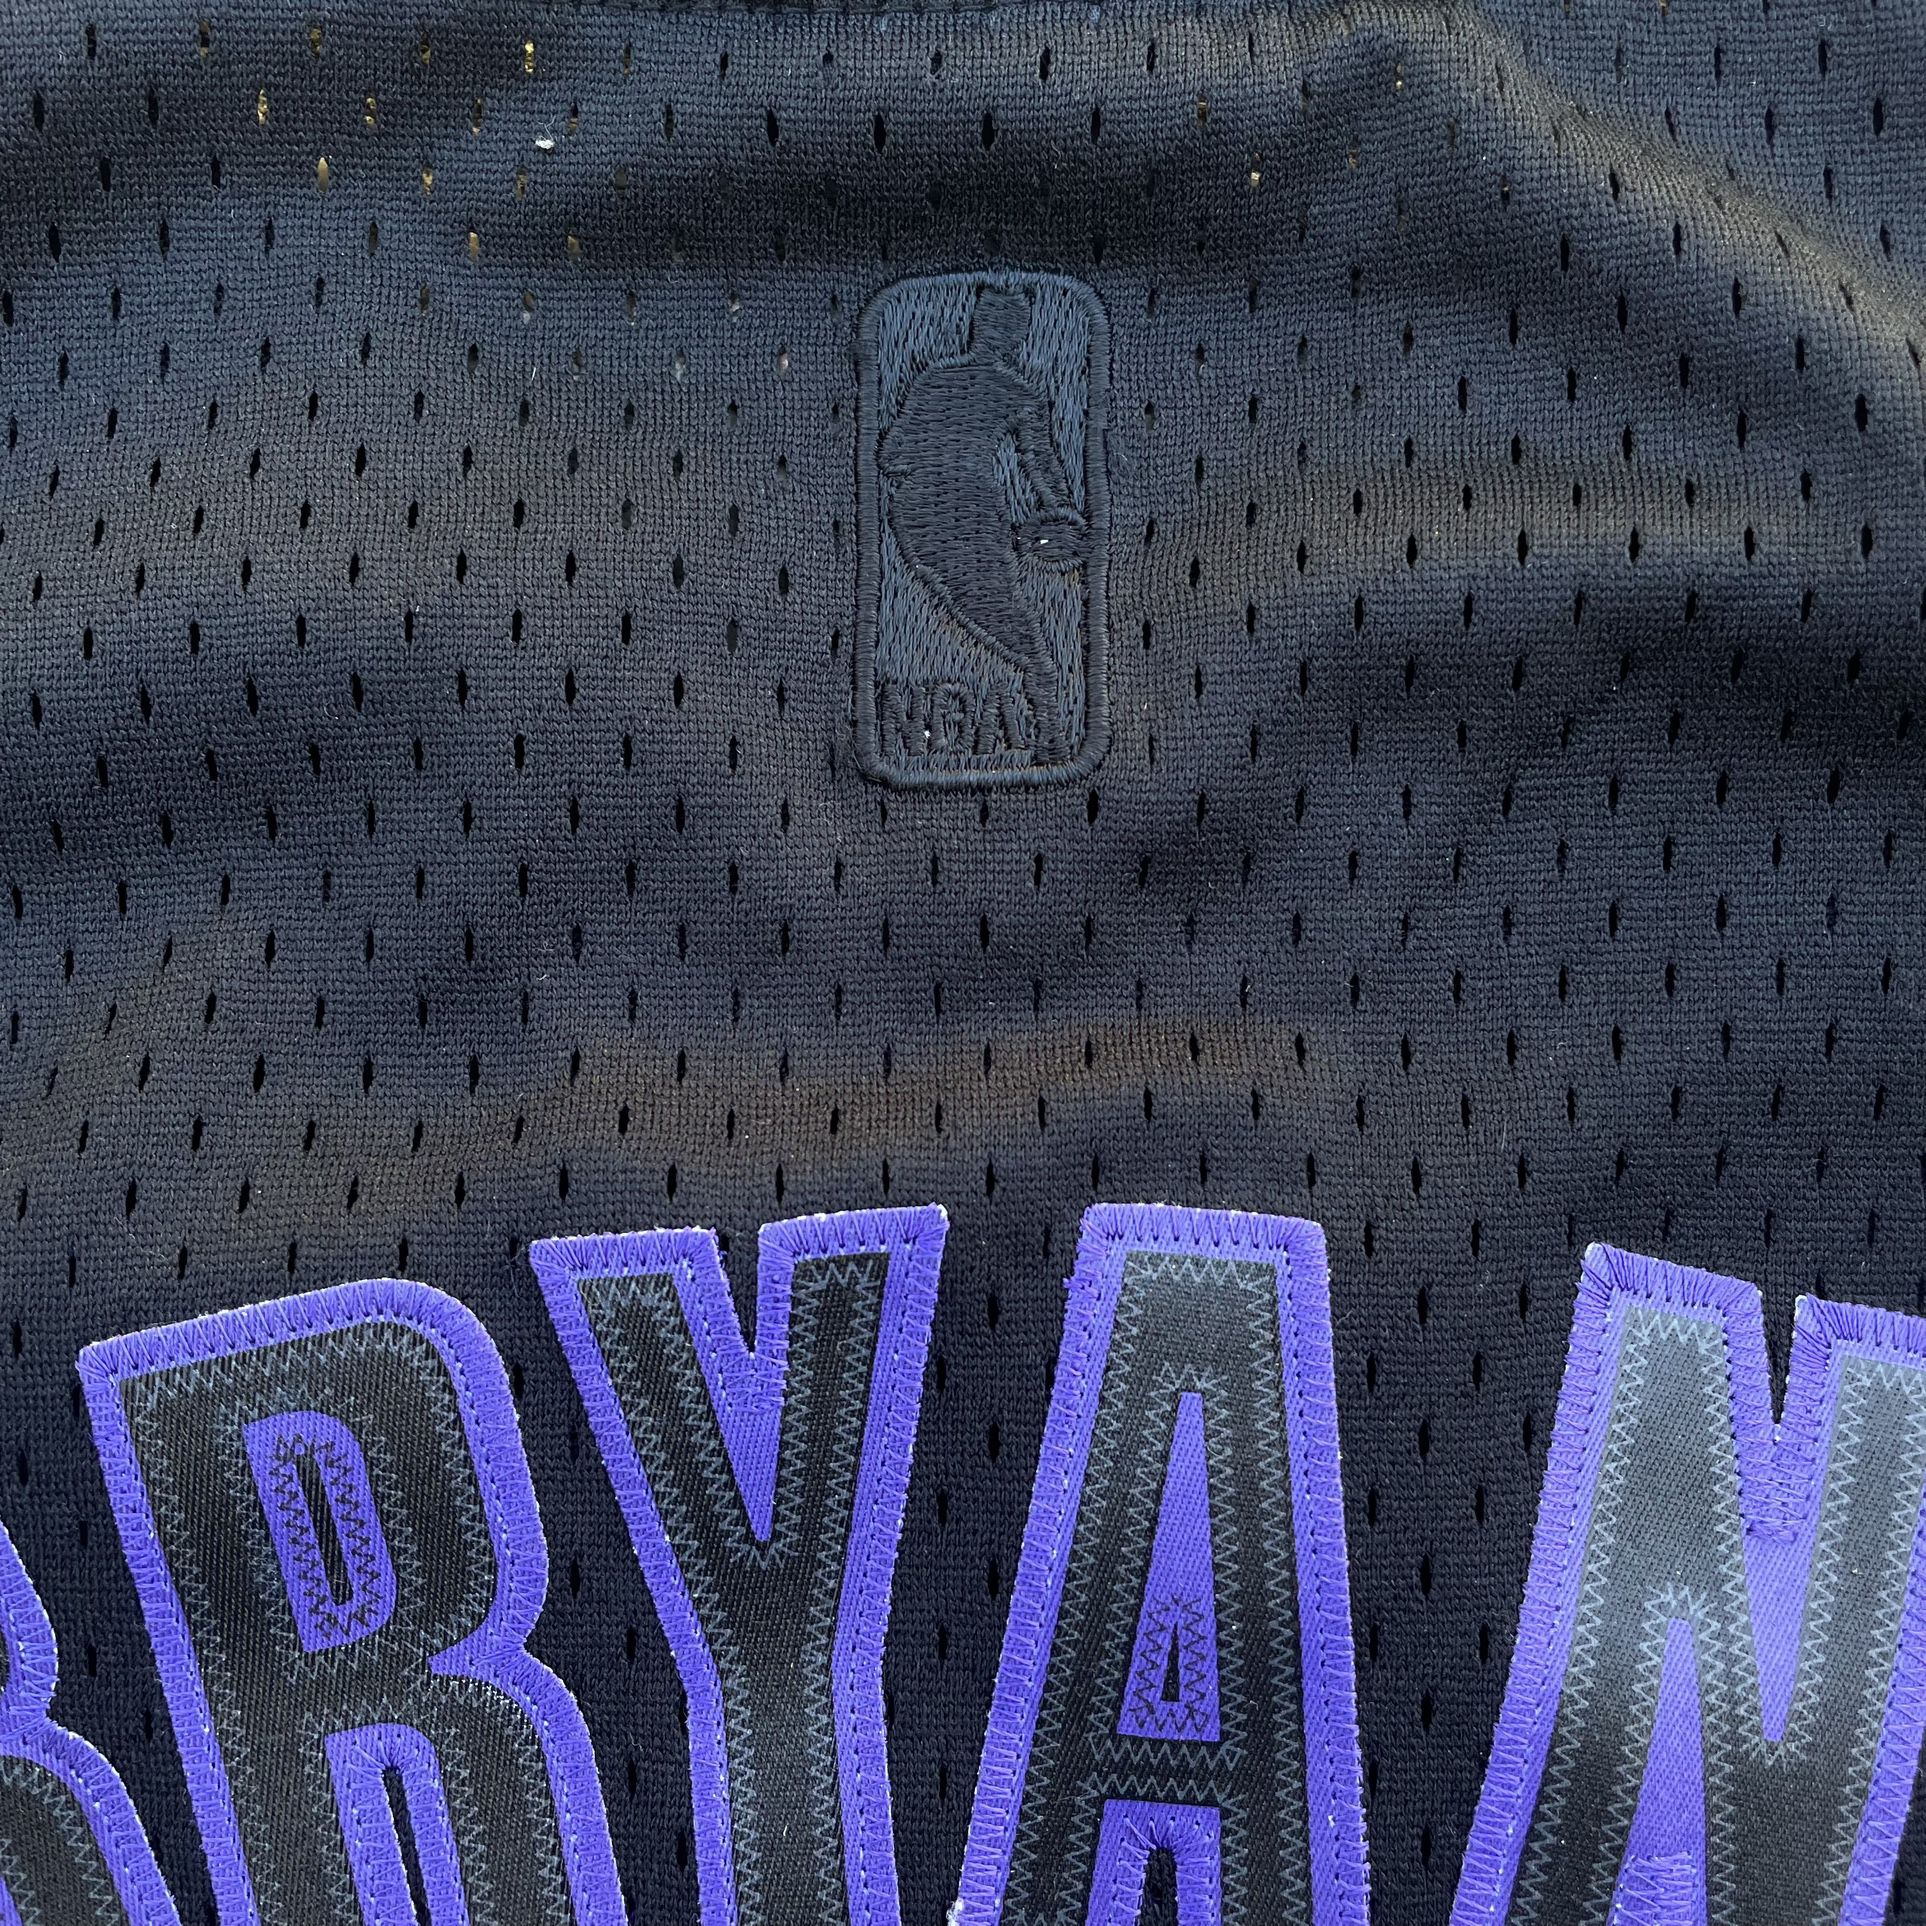 New La Lakers Kobe Bryant Adidas Hardwood Classics Jersey for Sale in  Dearborn, MI - OfferUp